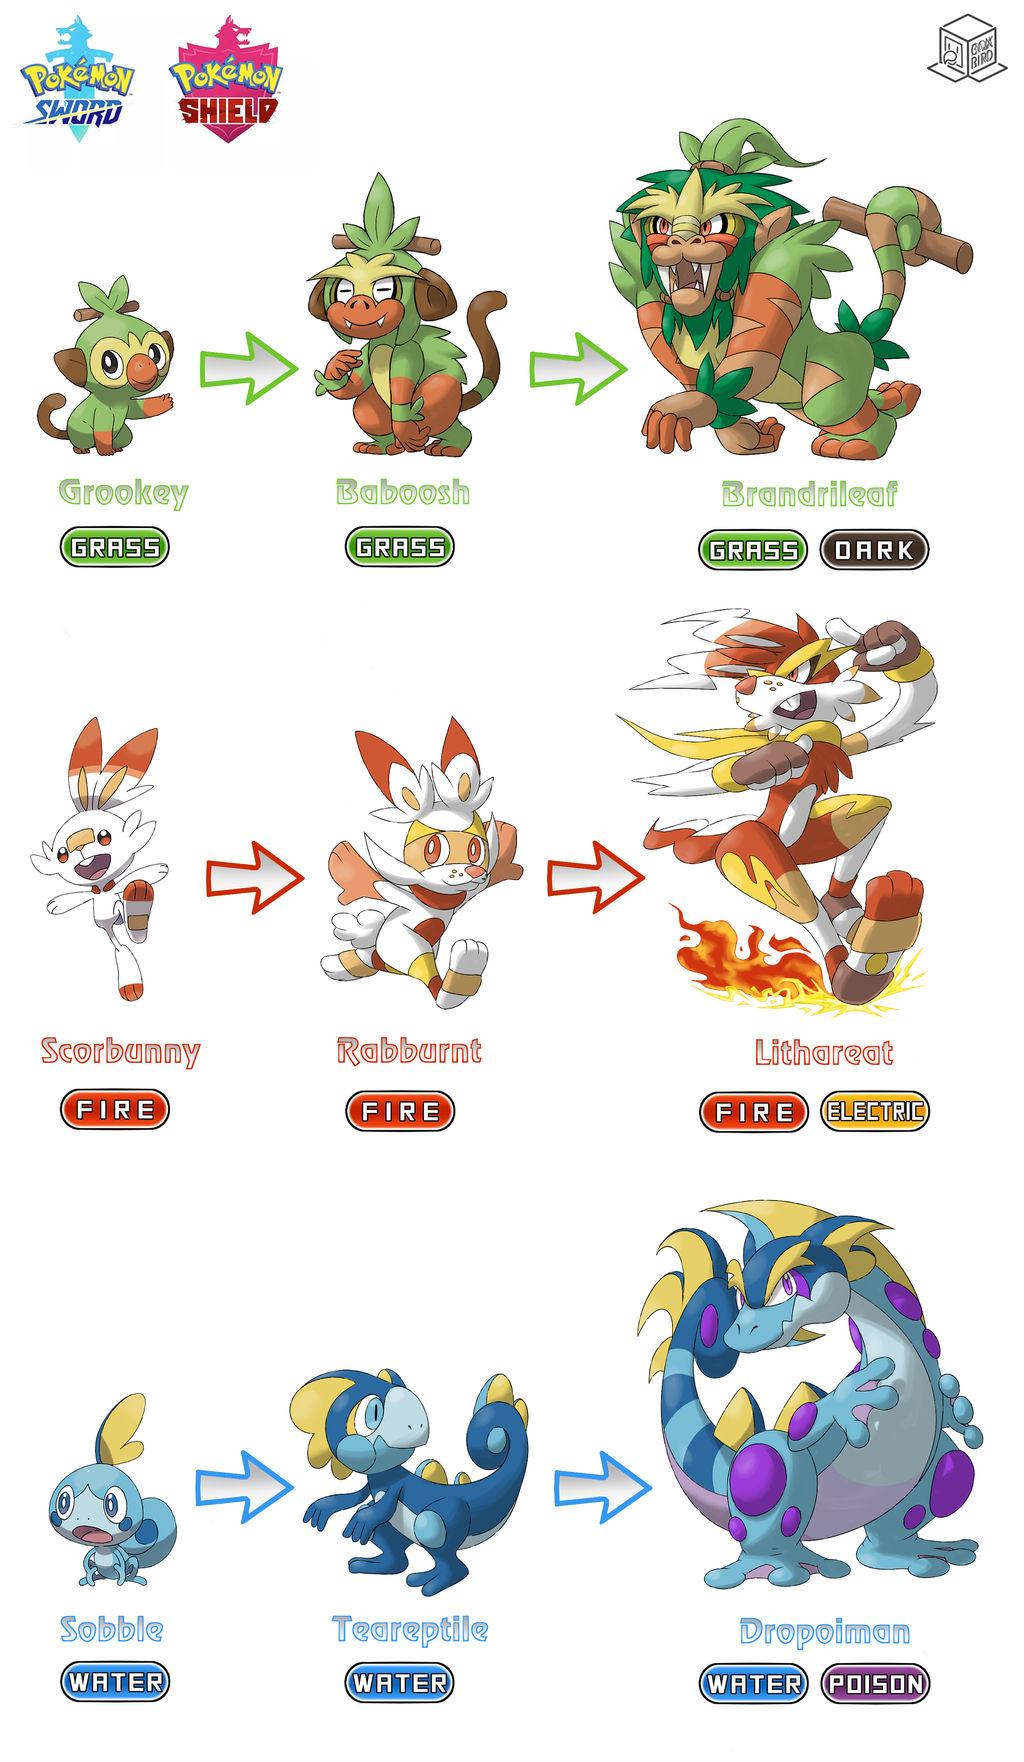 Pokémon Sword & Shield - All Starter Evolutions + Shiny Evolutions 